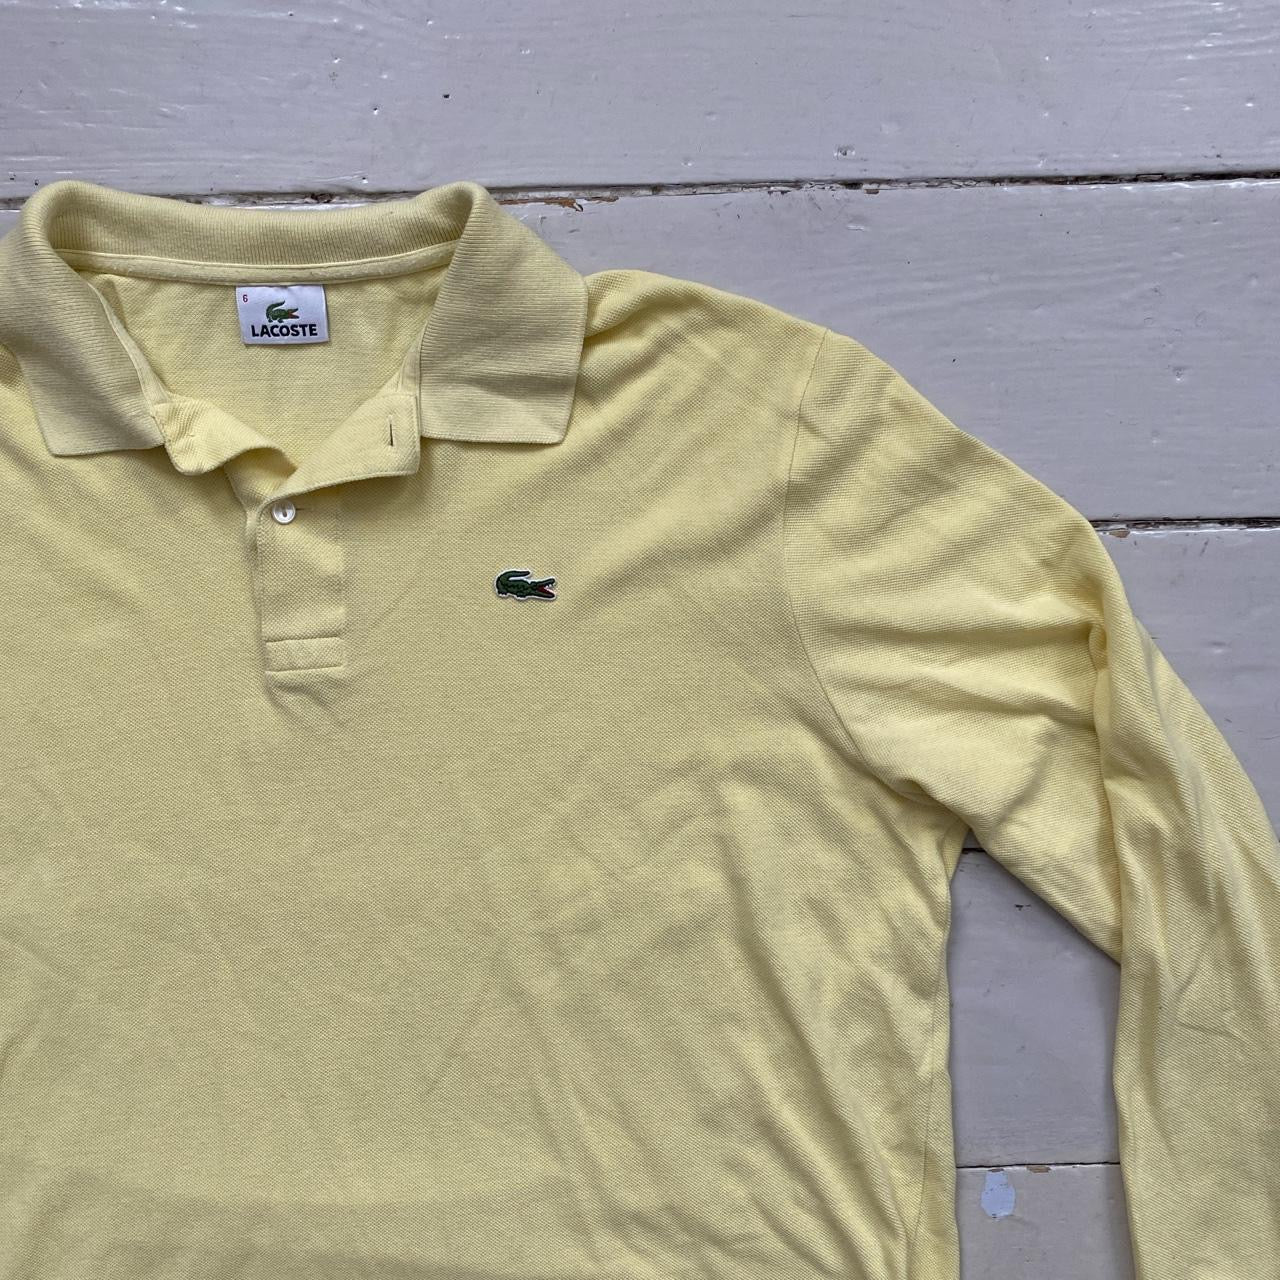 Lacoste Yellow Long Sleeve Polo Shirt (XL)